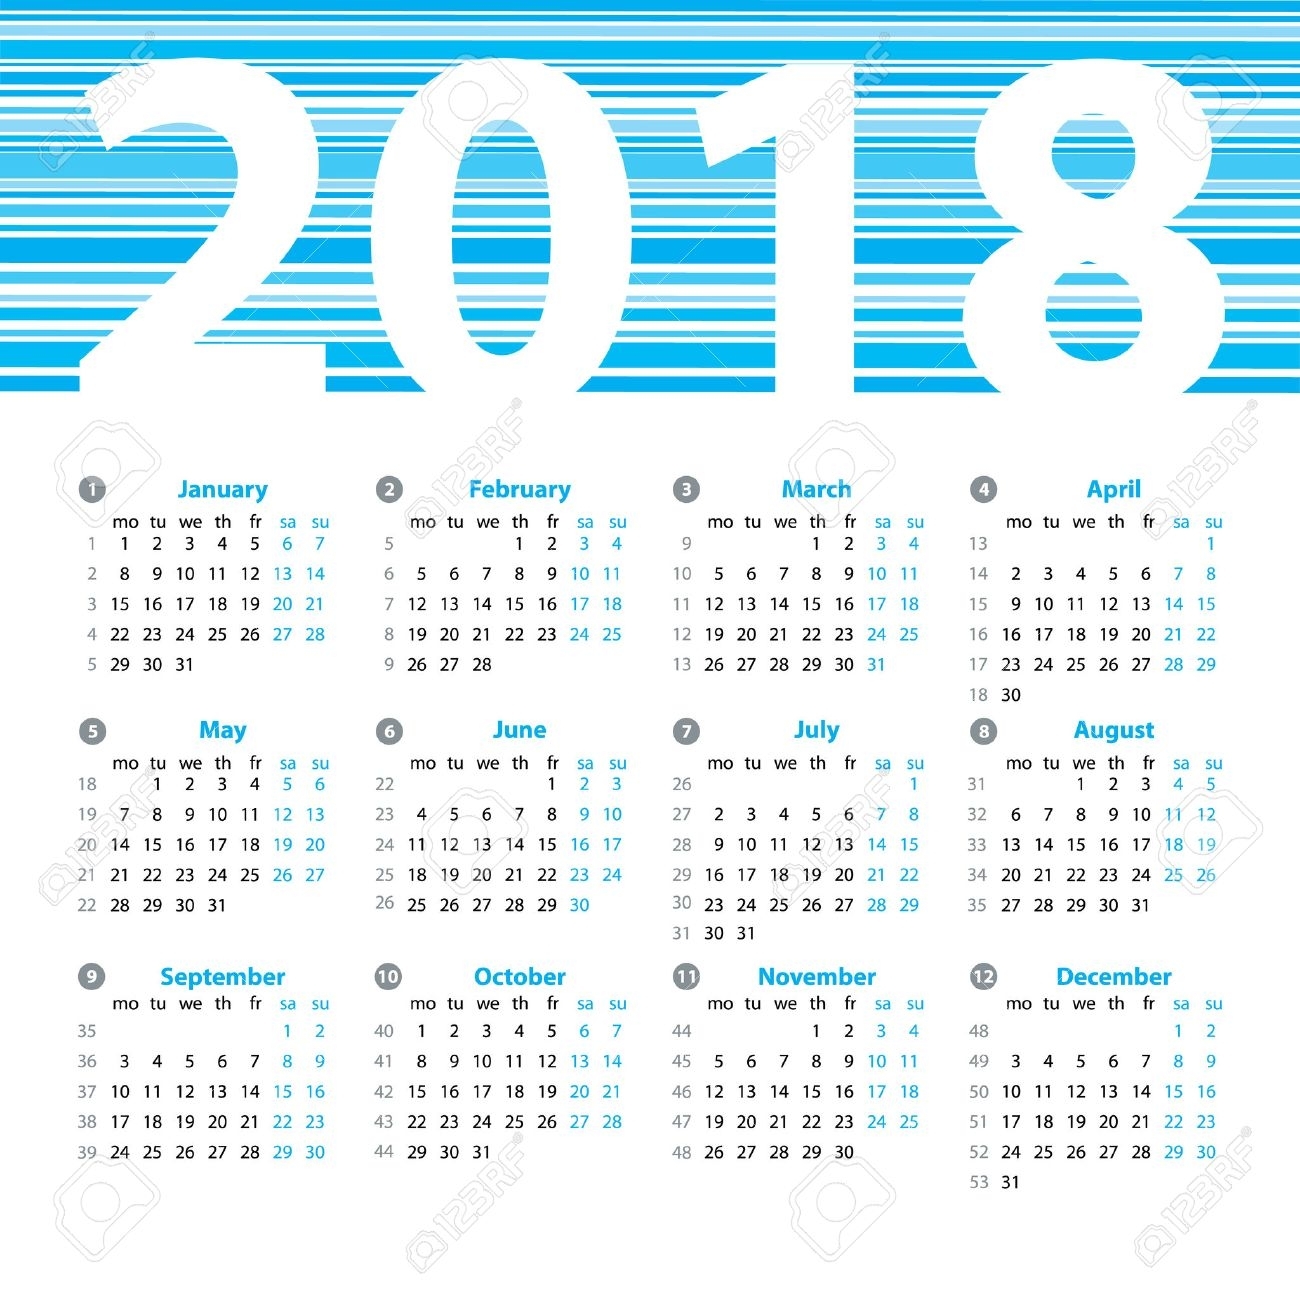 Calendar 2018 Year Vector Design Template With Week Numbers And with Week Of The Year Number Calendar